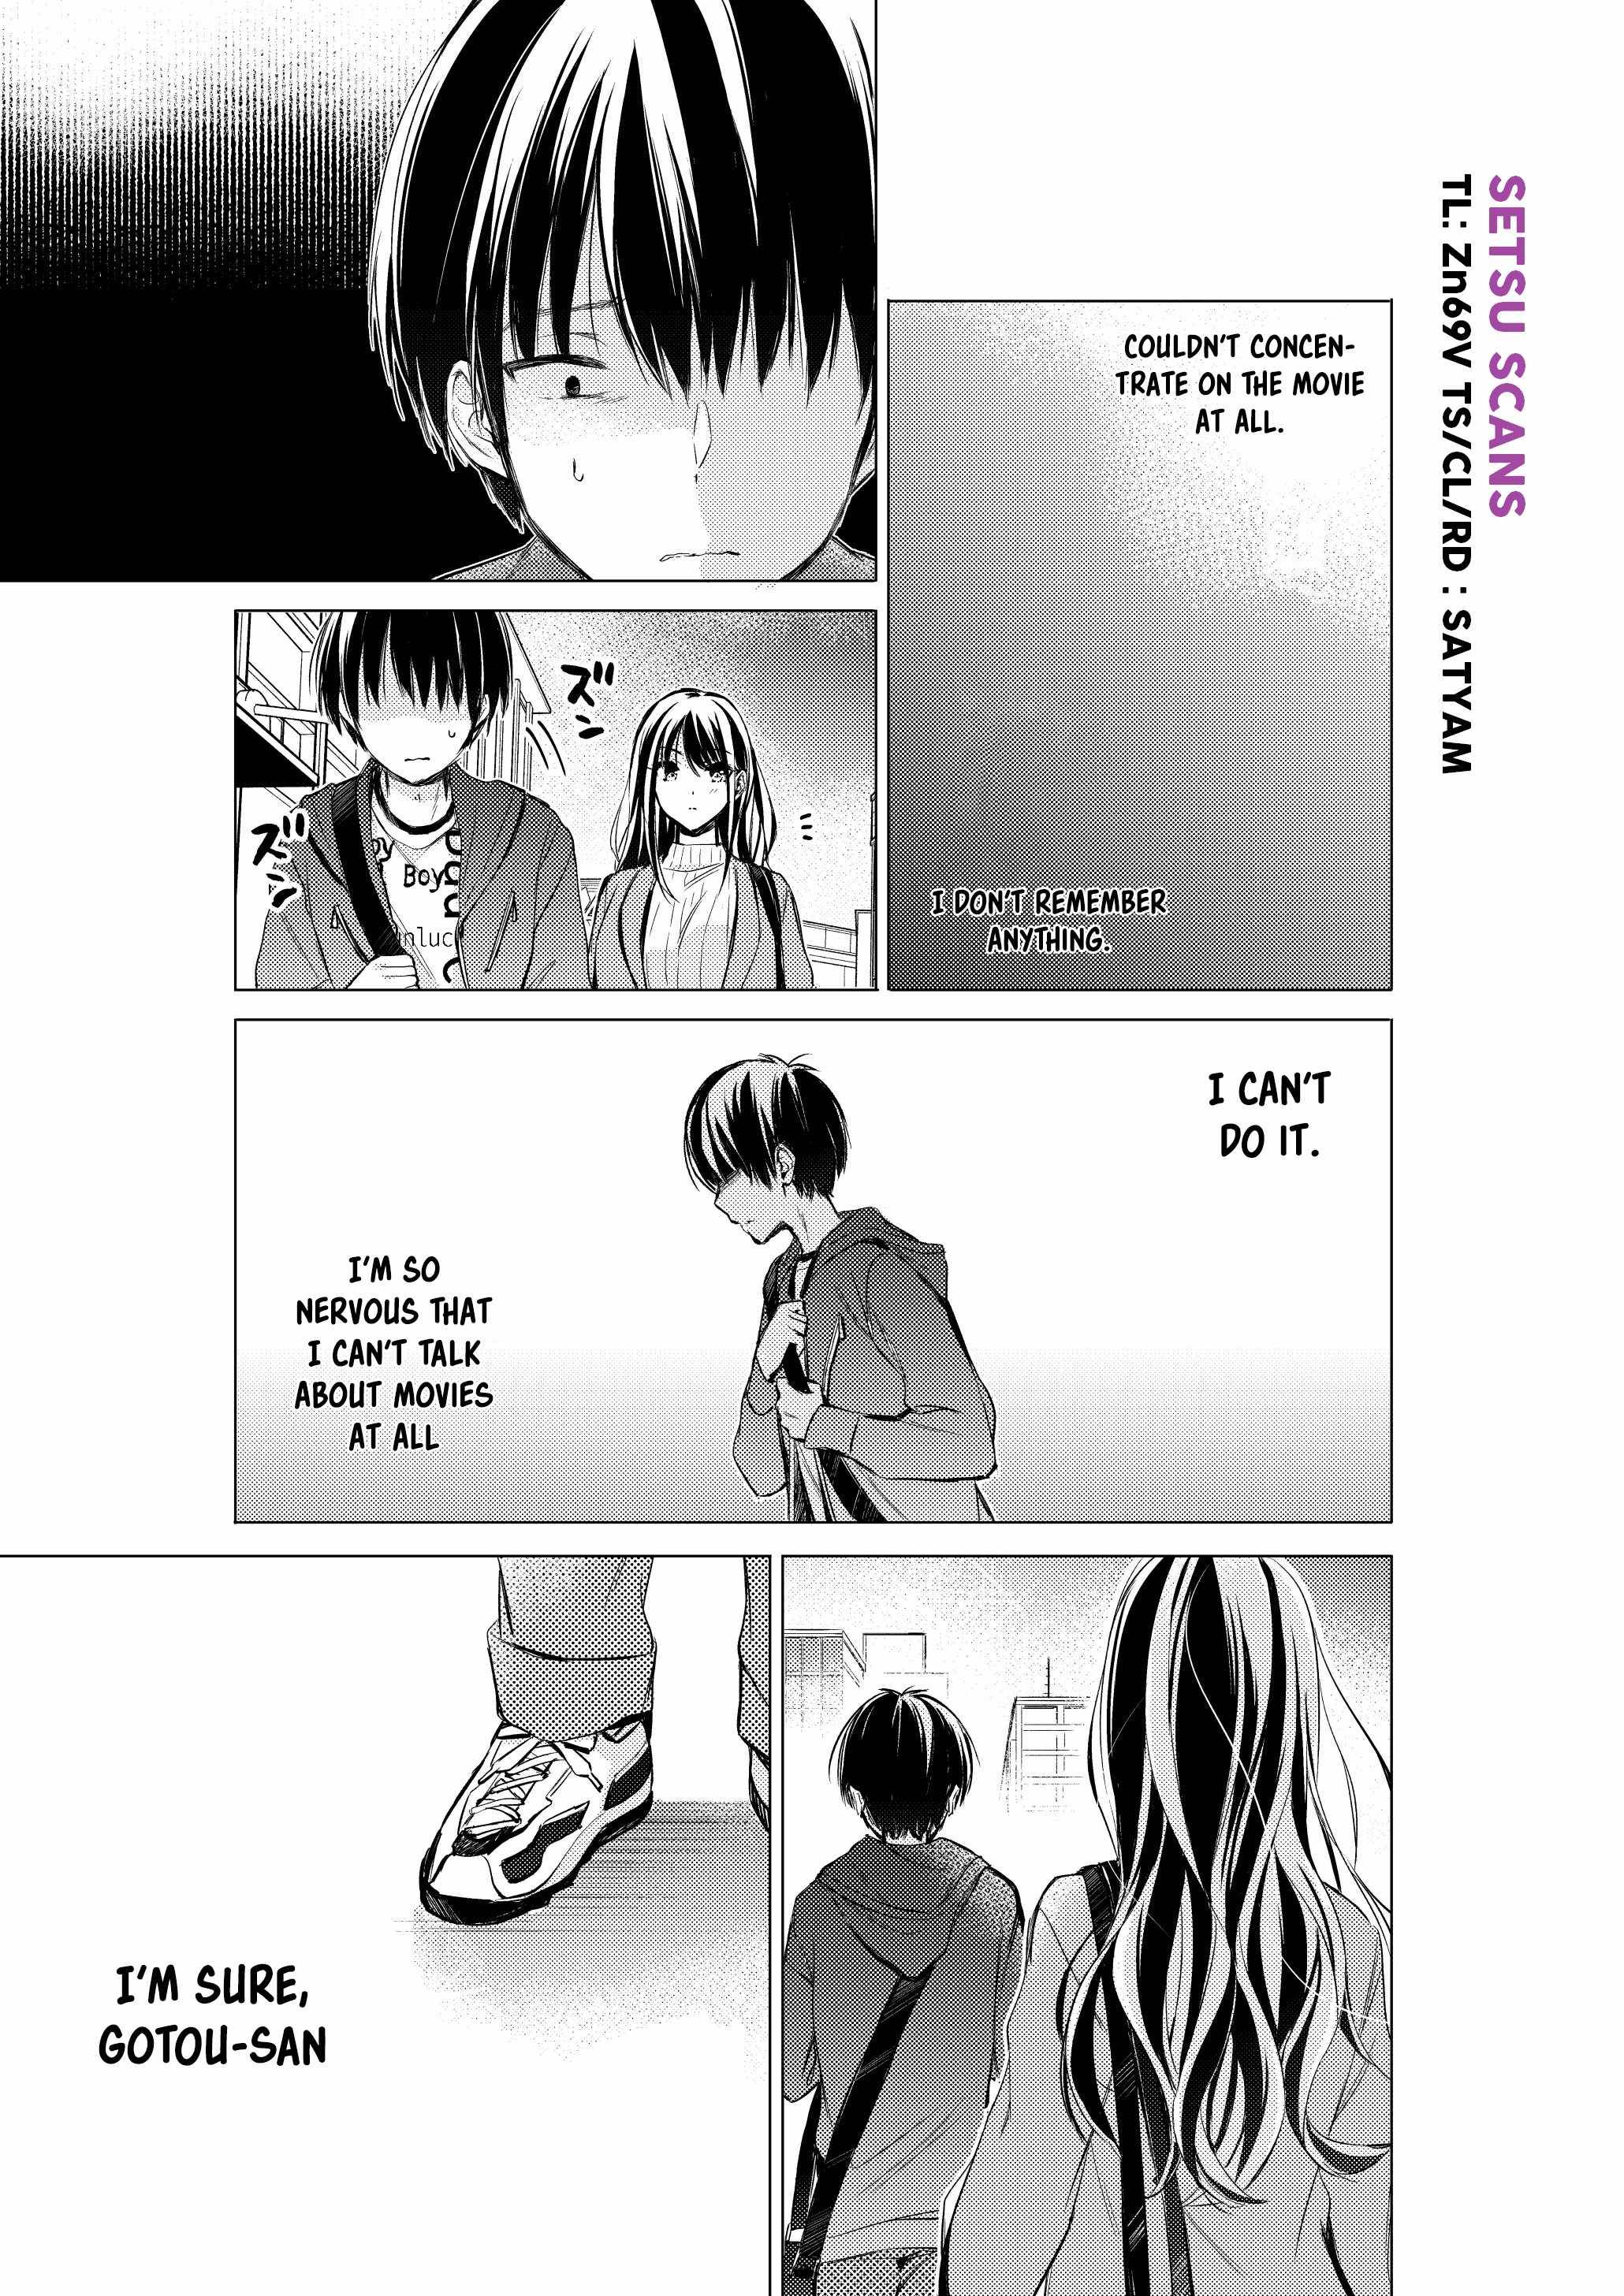 Gotou-san Wants Me to Turn Around - chapter 23 - #2